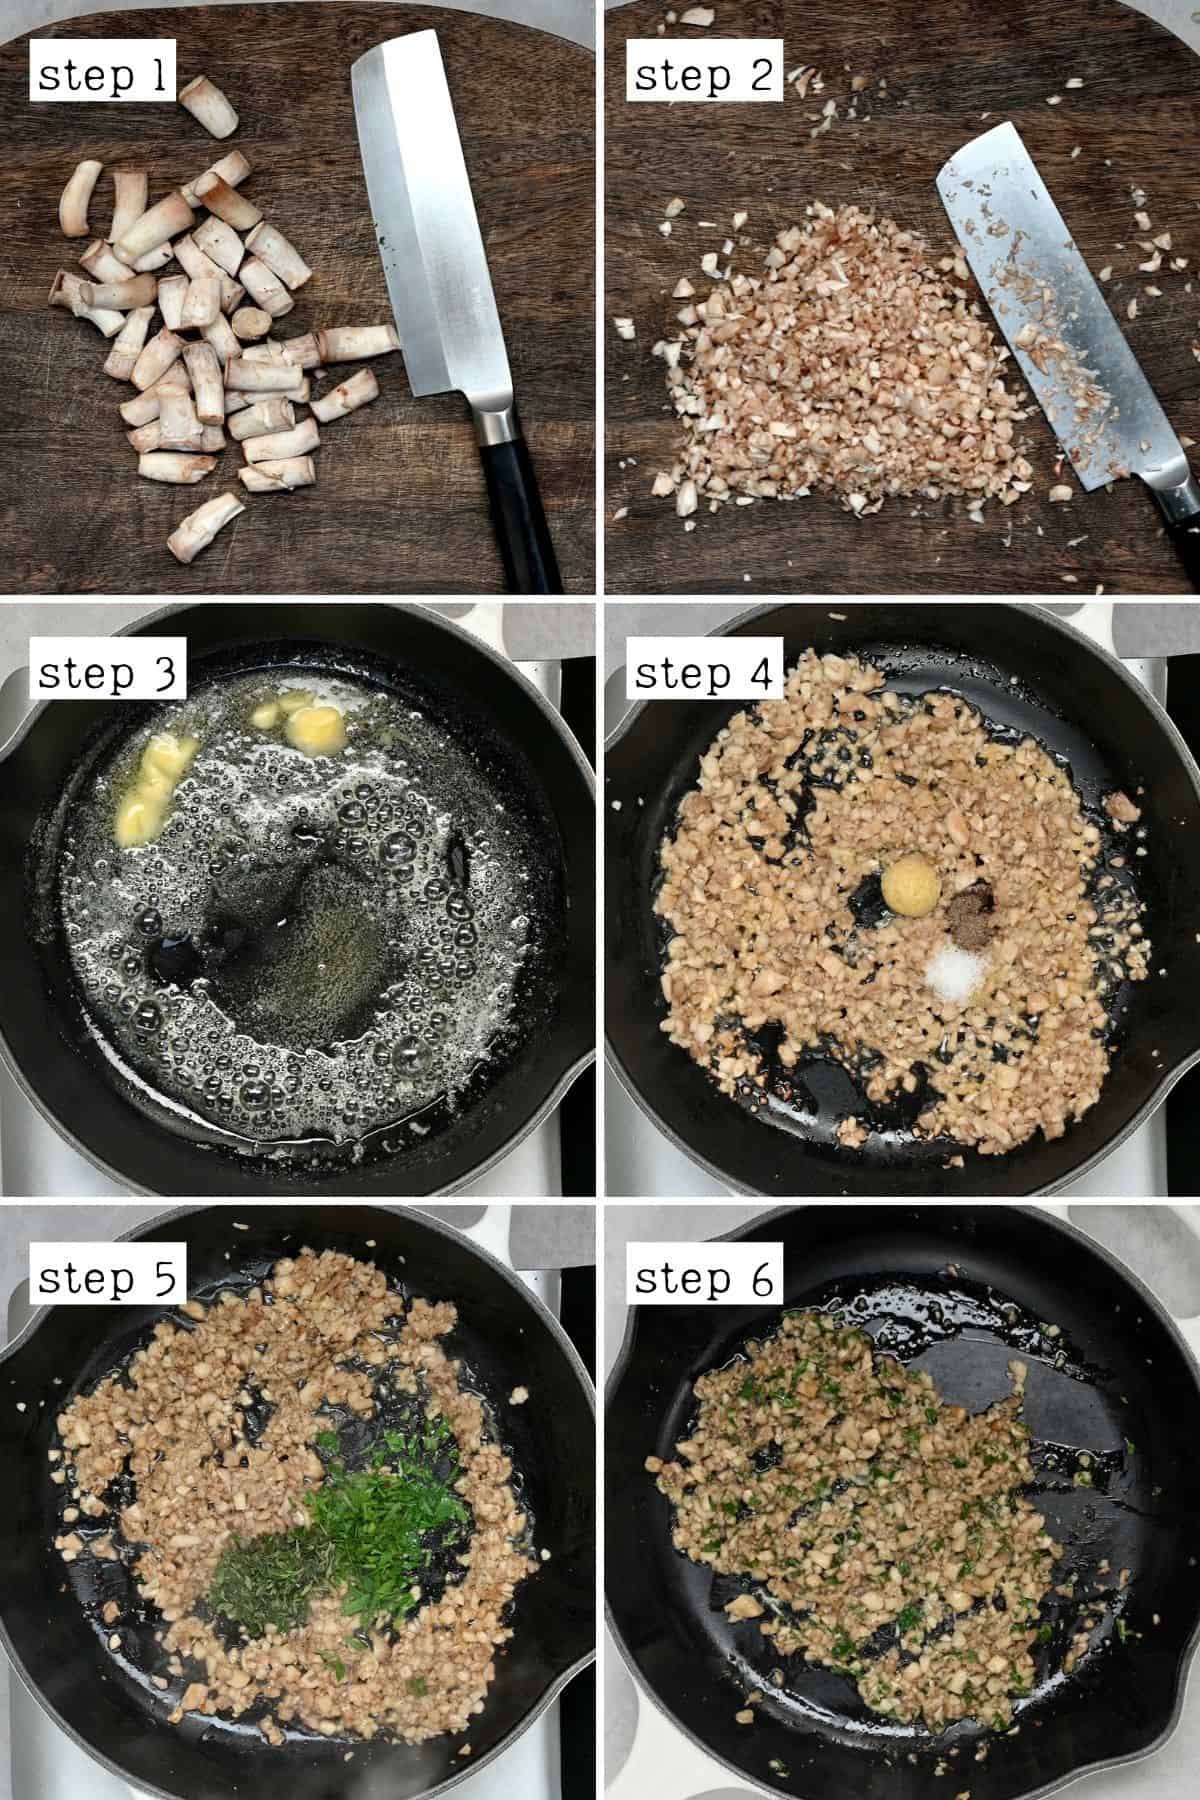 Steps for cooking mushroom stems